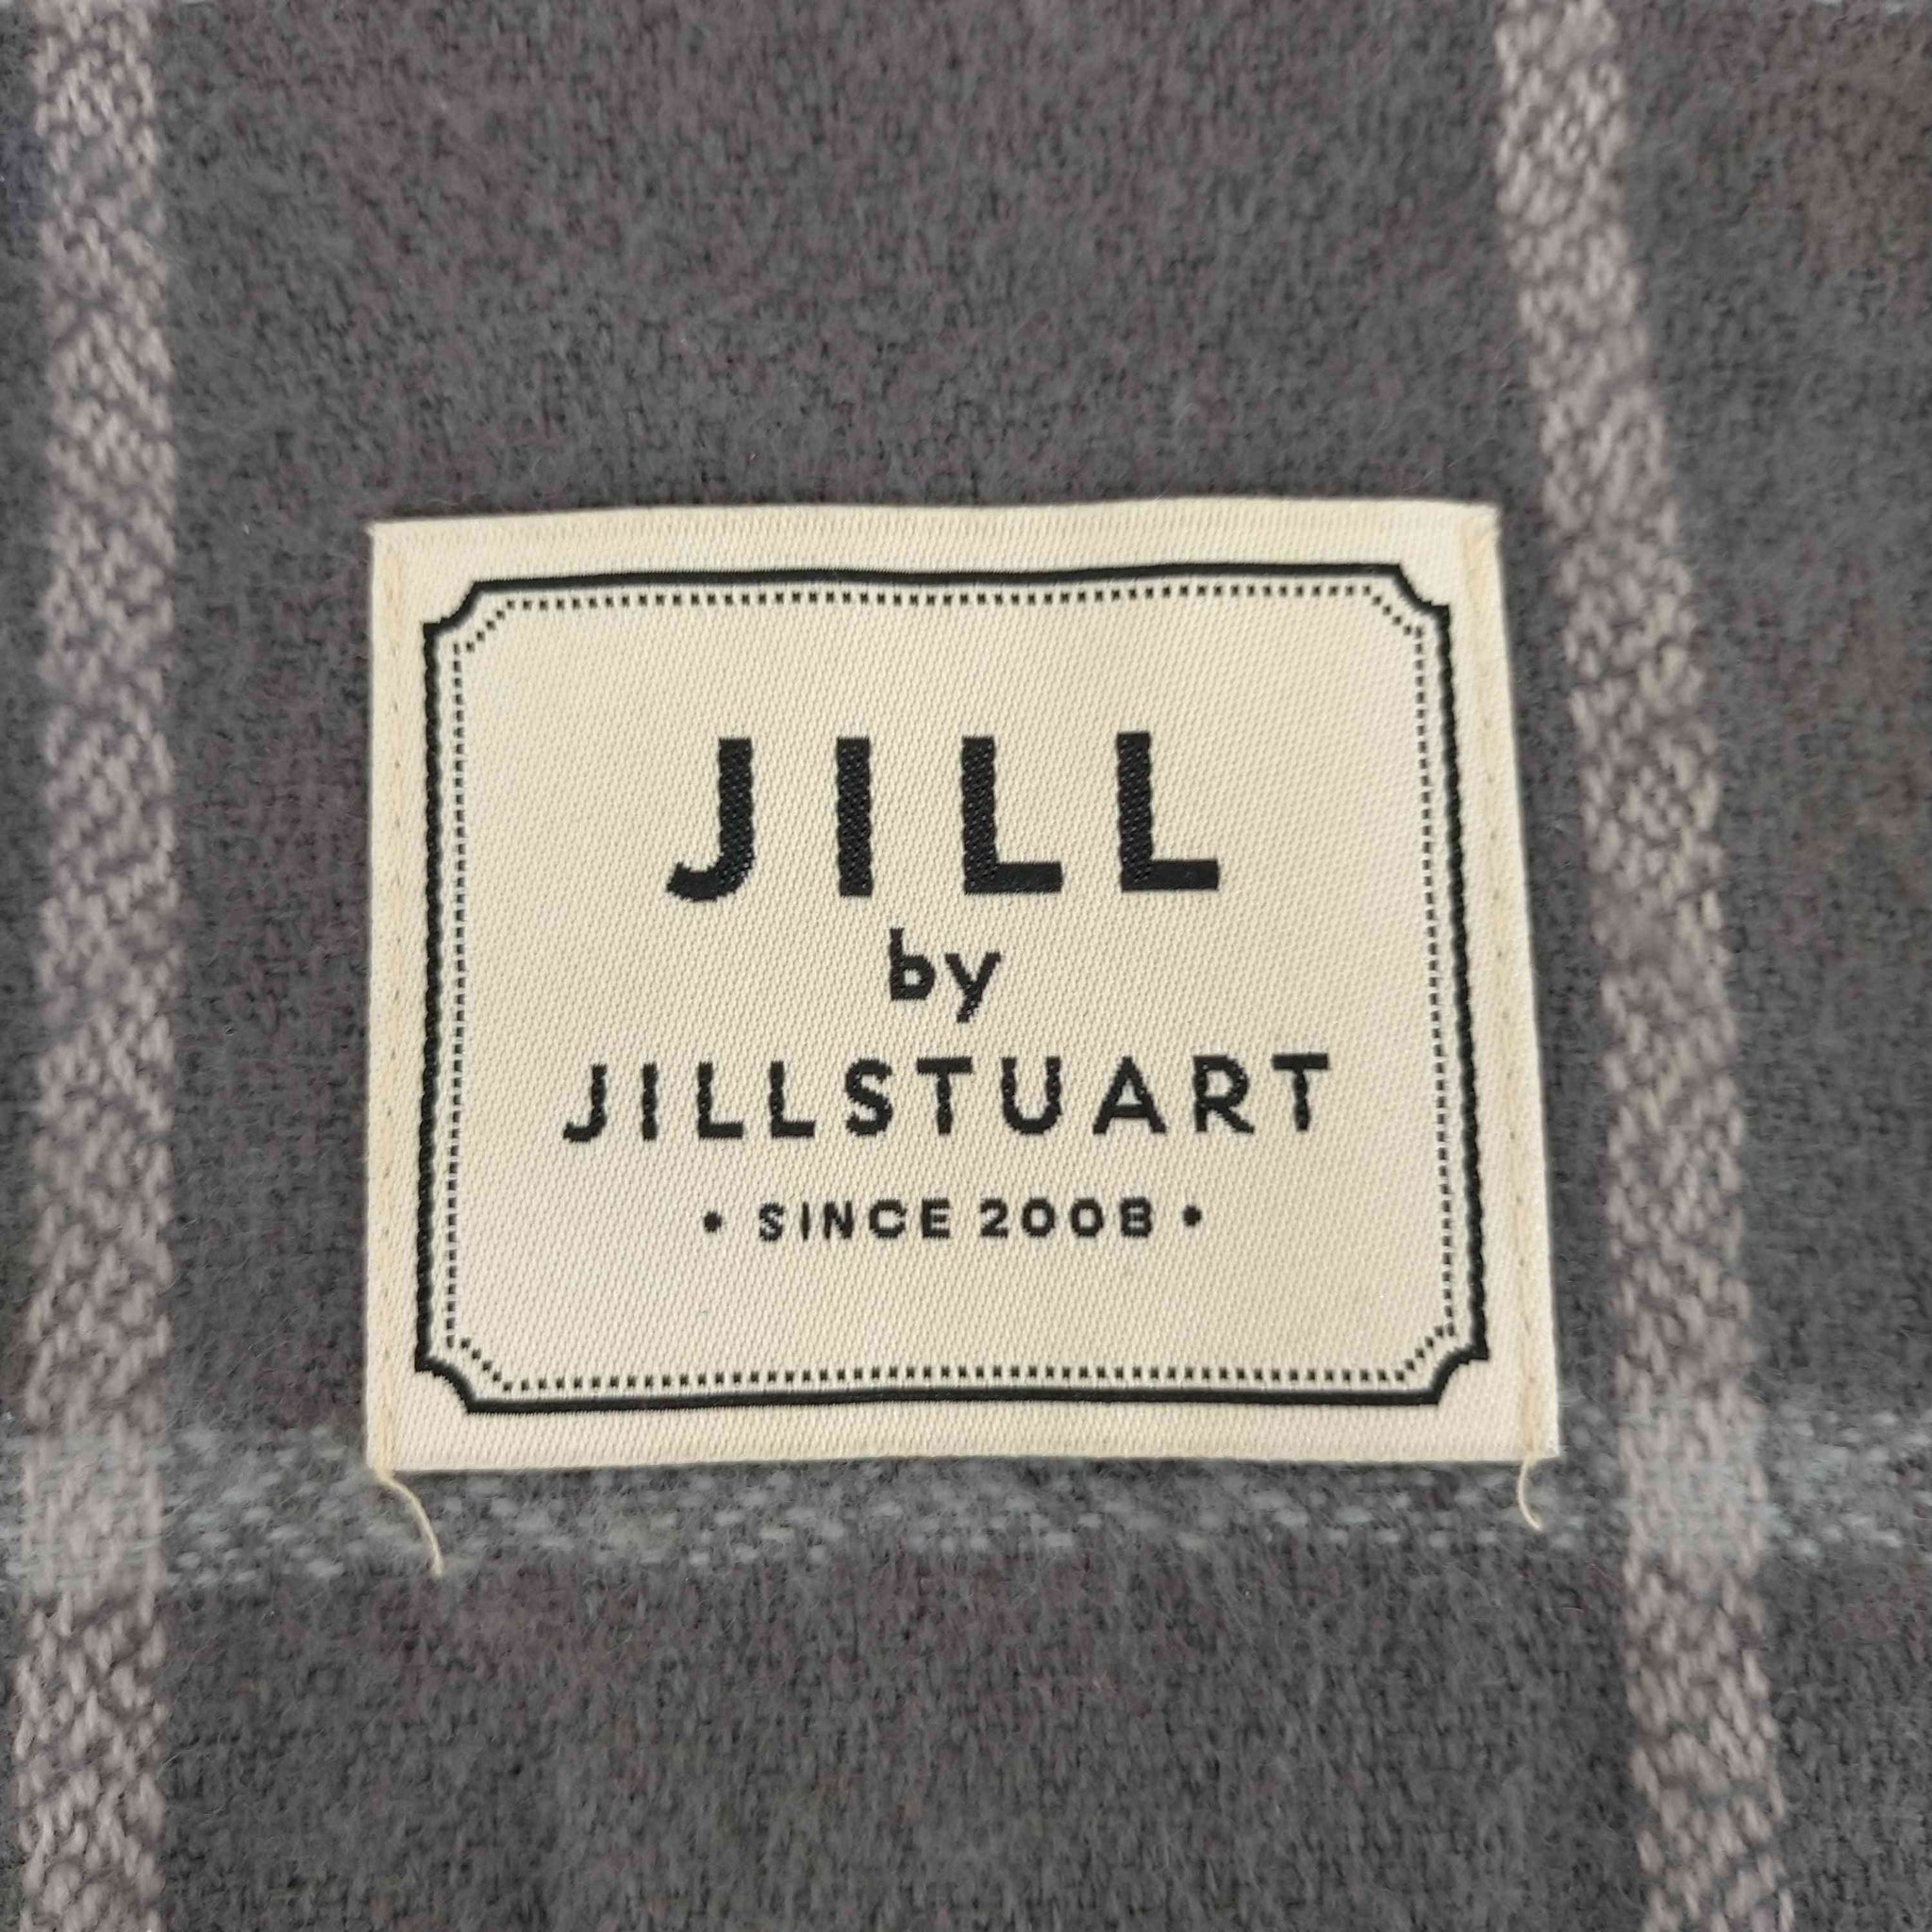 JILL by JILLSTUART(ジルバイジルスチュアート)チェックストール